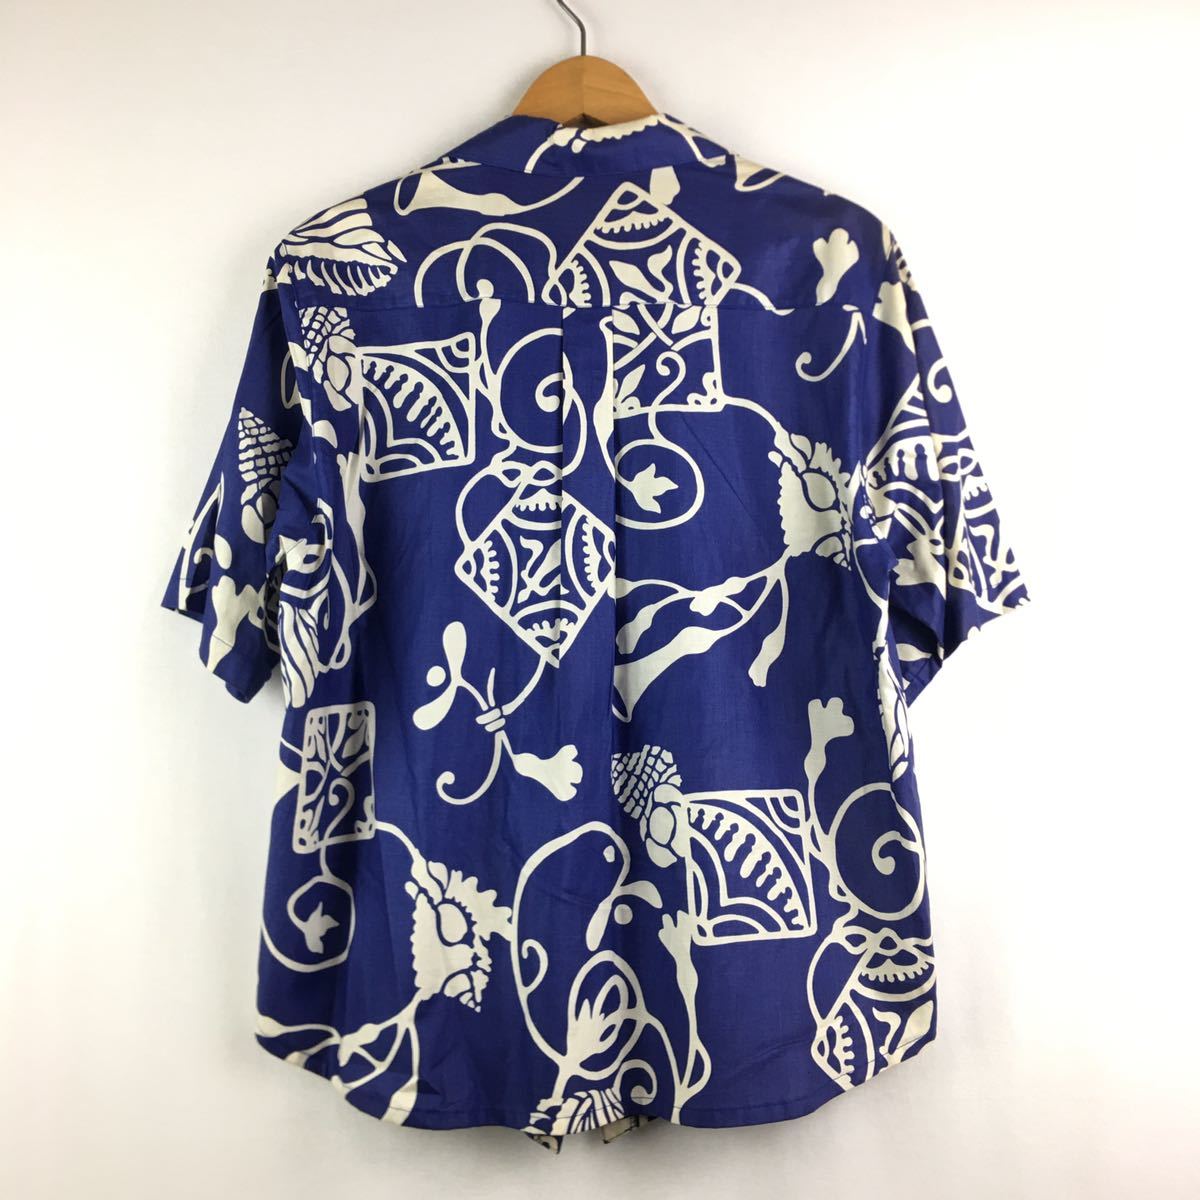  Vintage 80s[ aloha shirt ] made in Japan single color pattern shirt total pattern Hawaiian Hawaii deformation race . collar cotton short sleeves shirt American Casual Heisei era retro 90s Y2K